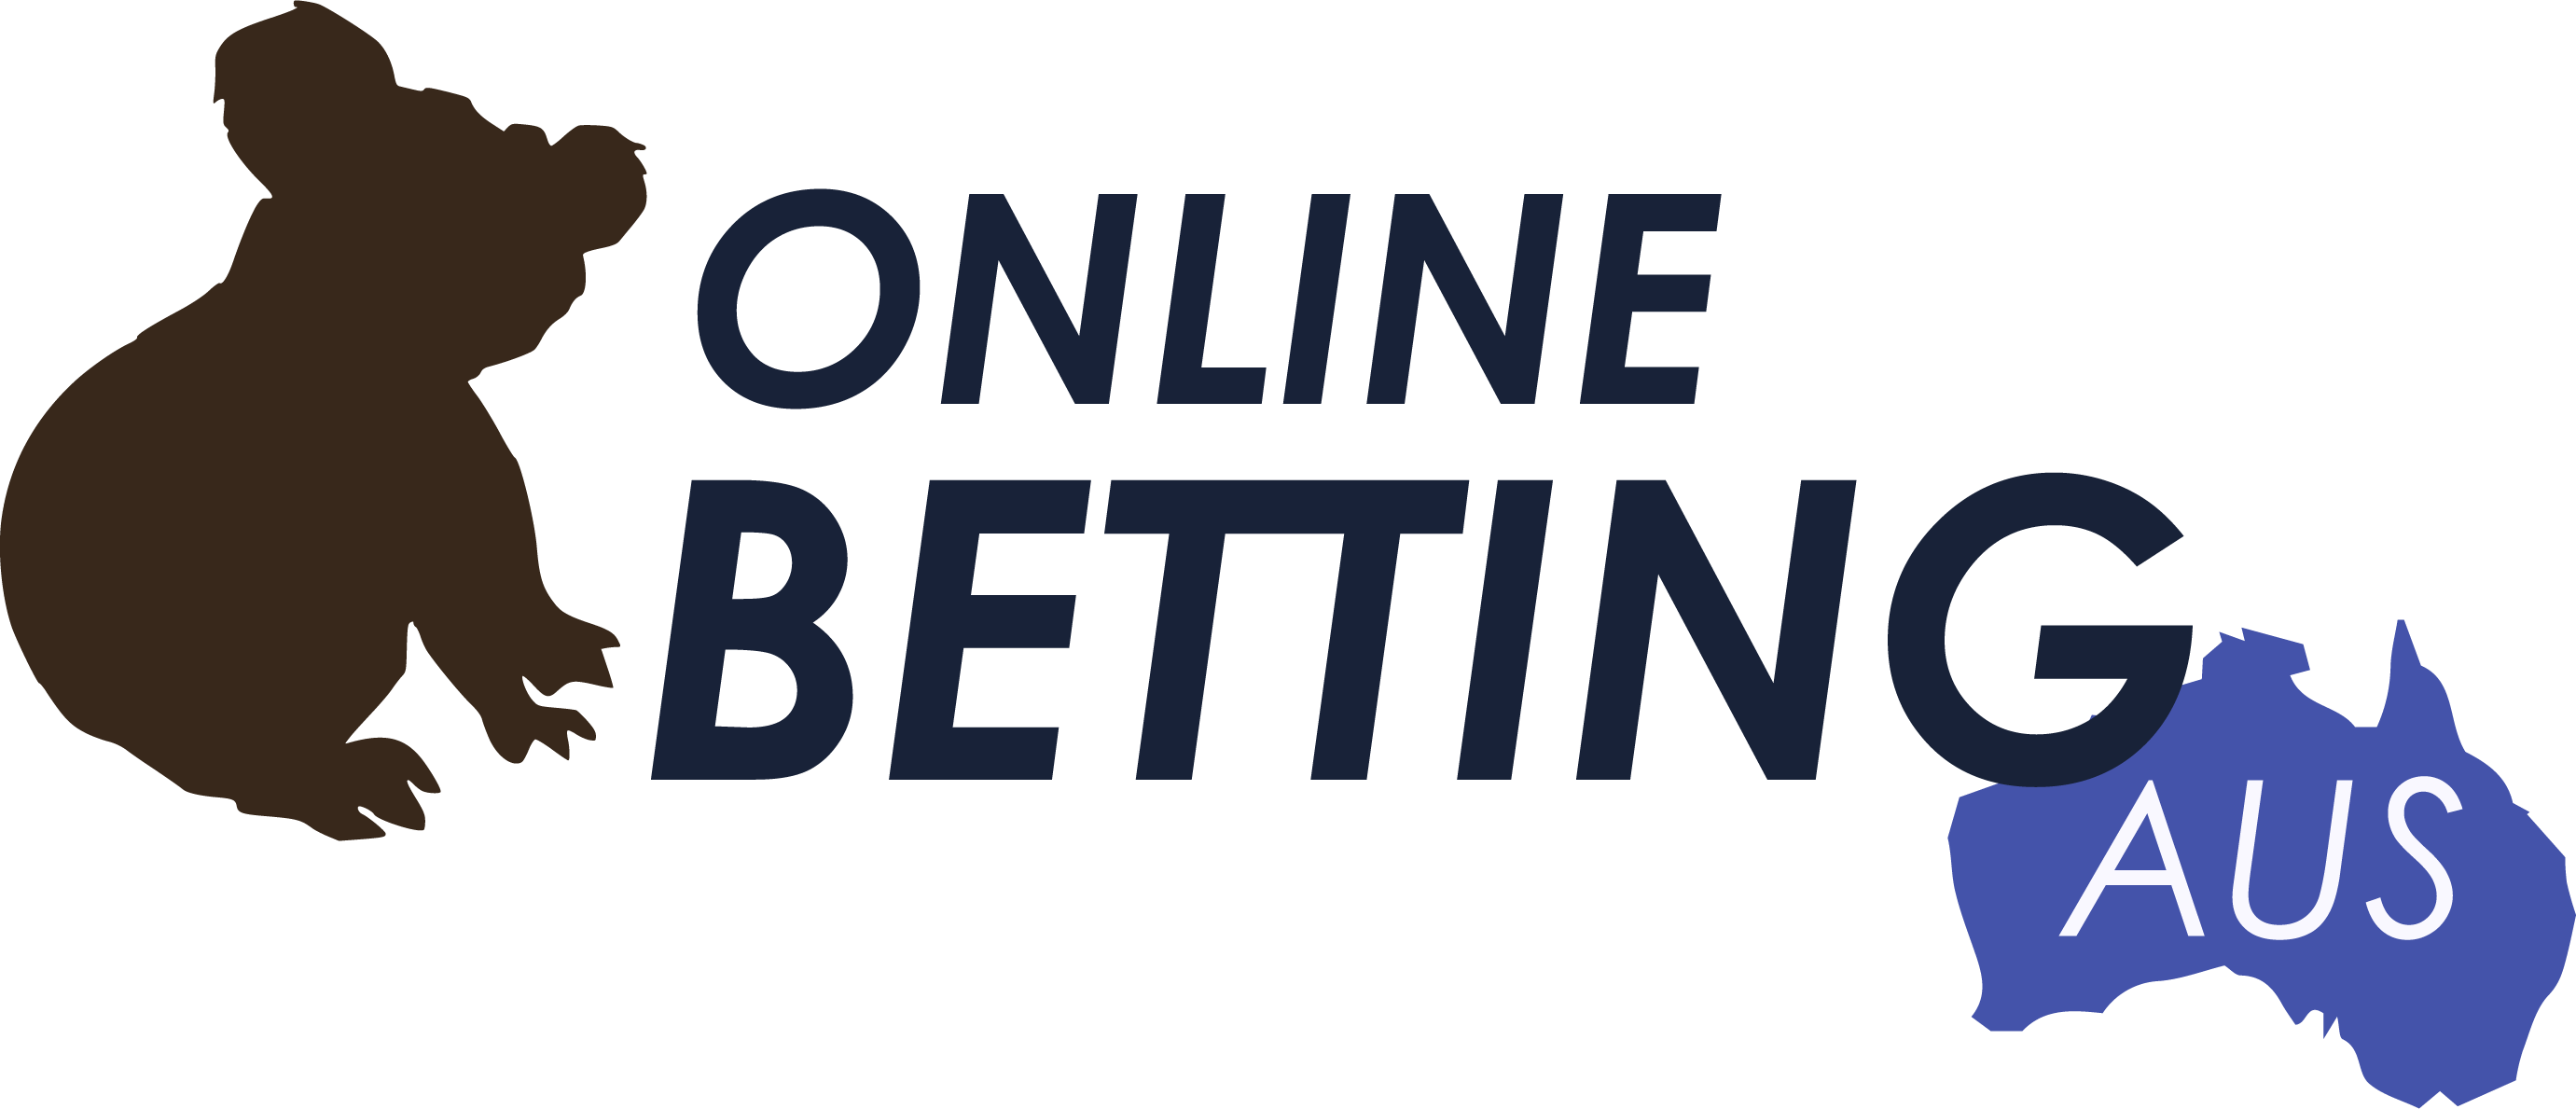 Online Betting AUS - our main logo with Australia and Koala